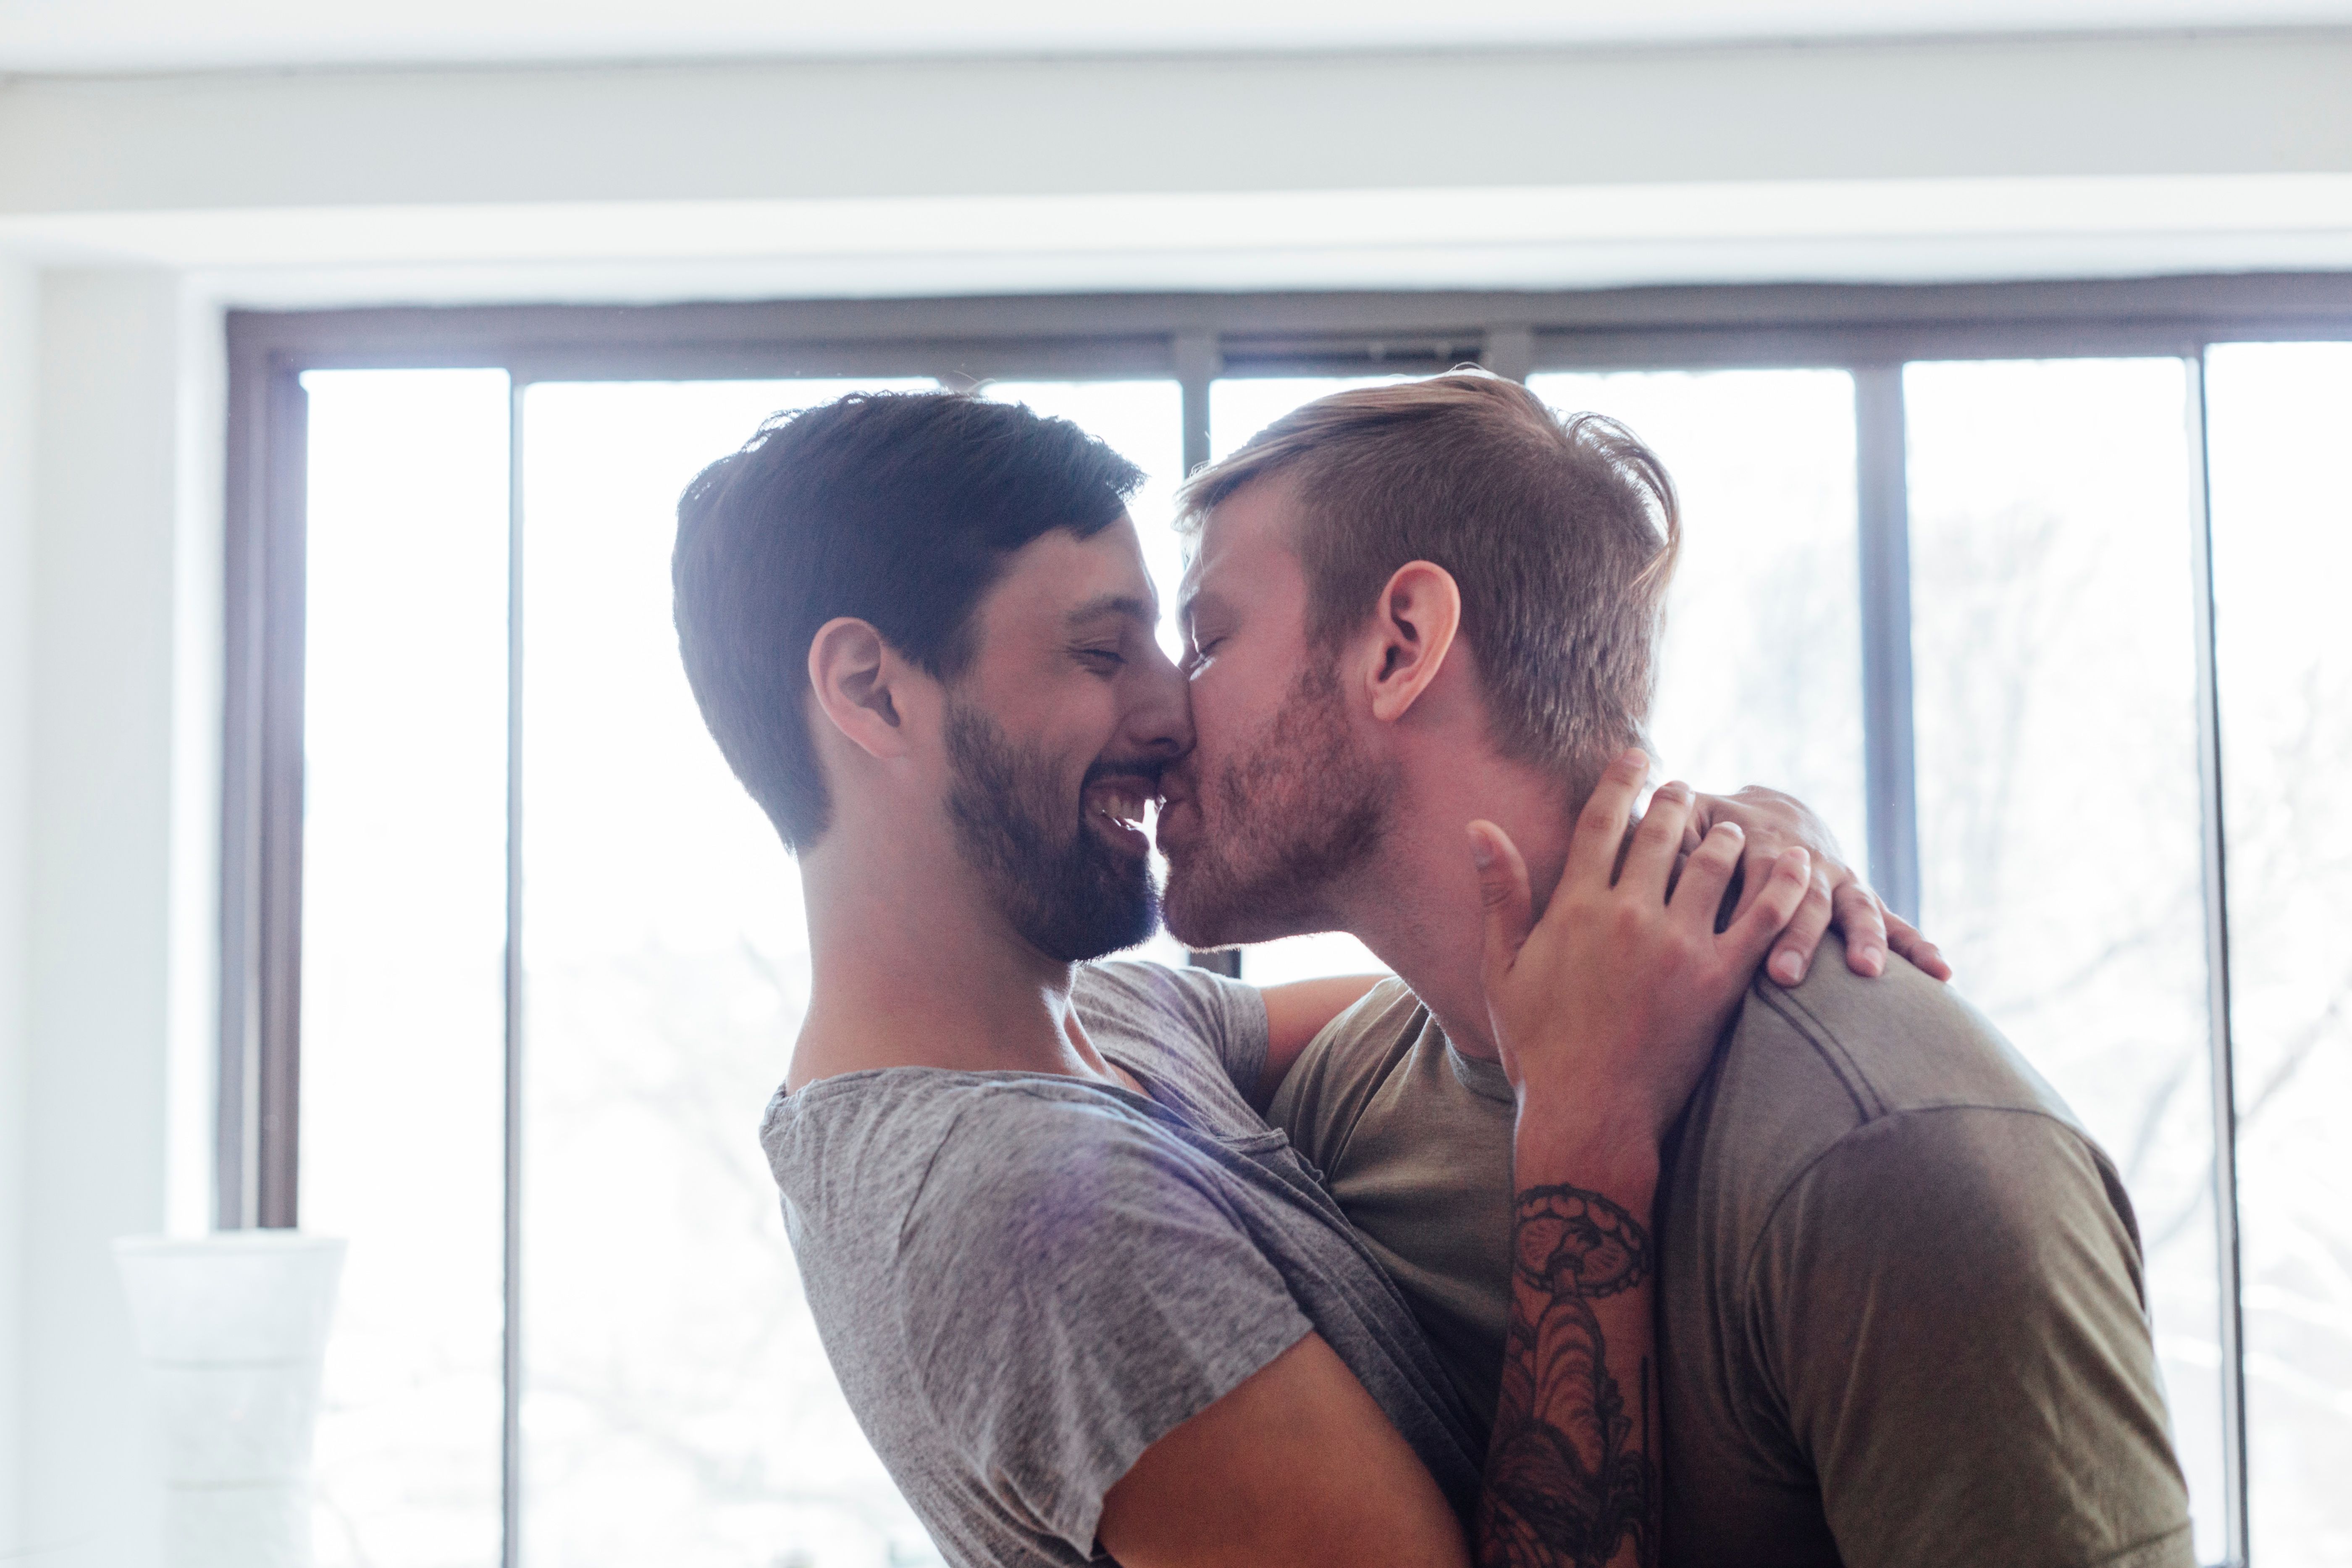 married bisexual men vids Adult Pictures